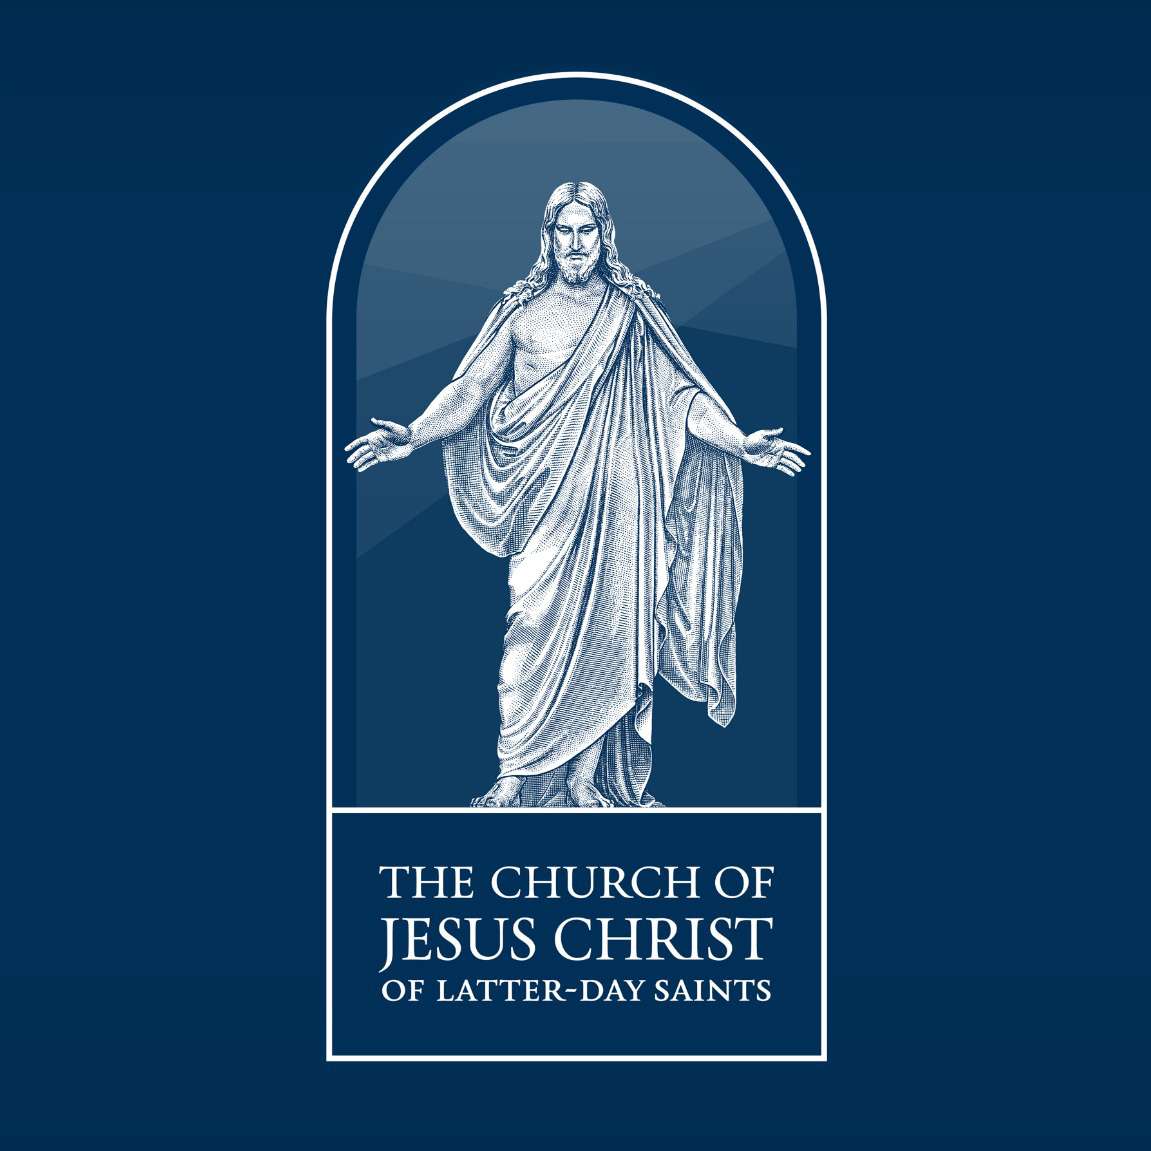 Brand New: New Logo for The Church of Jesus Christ of Latter